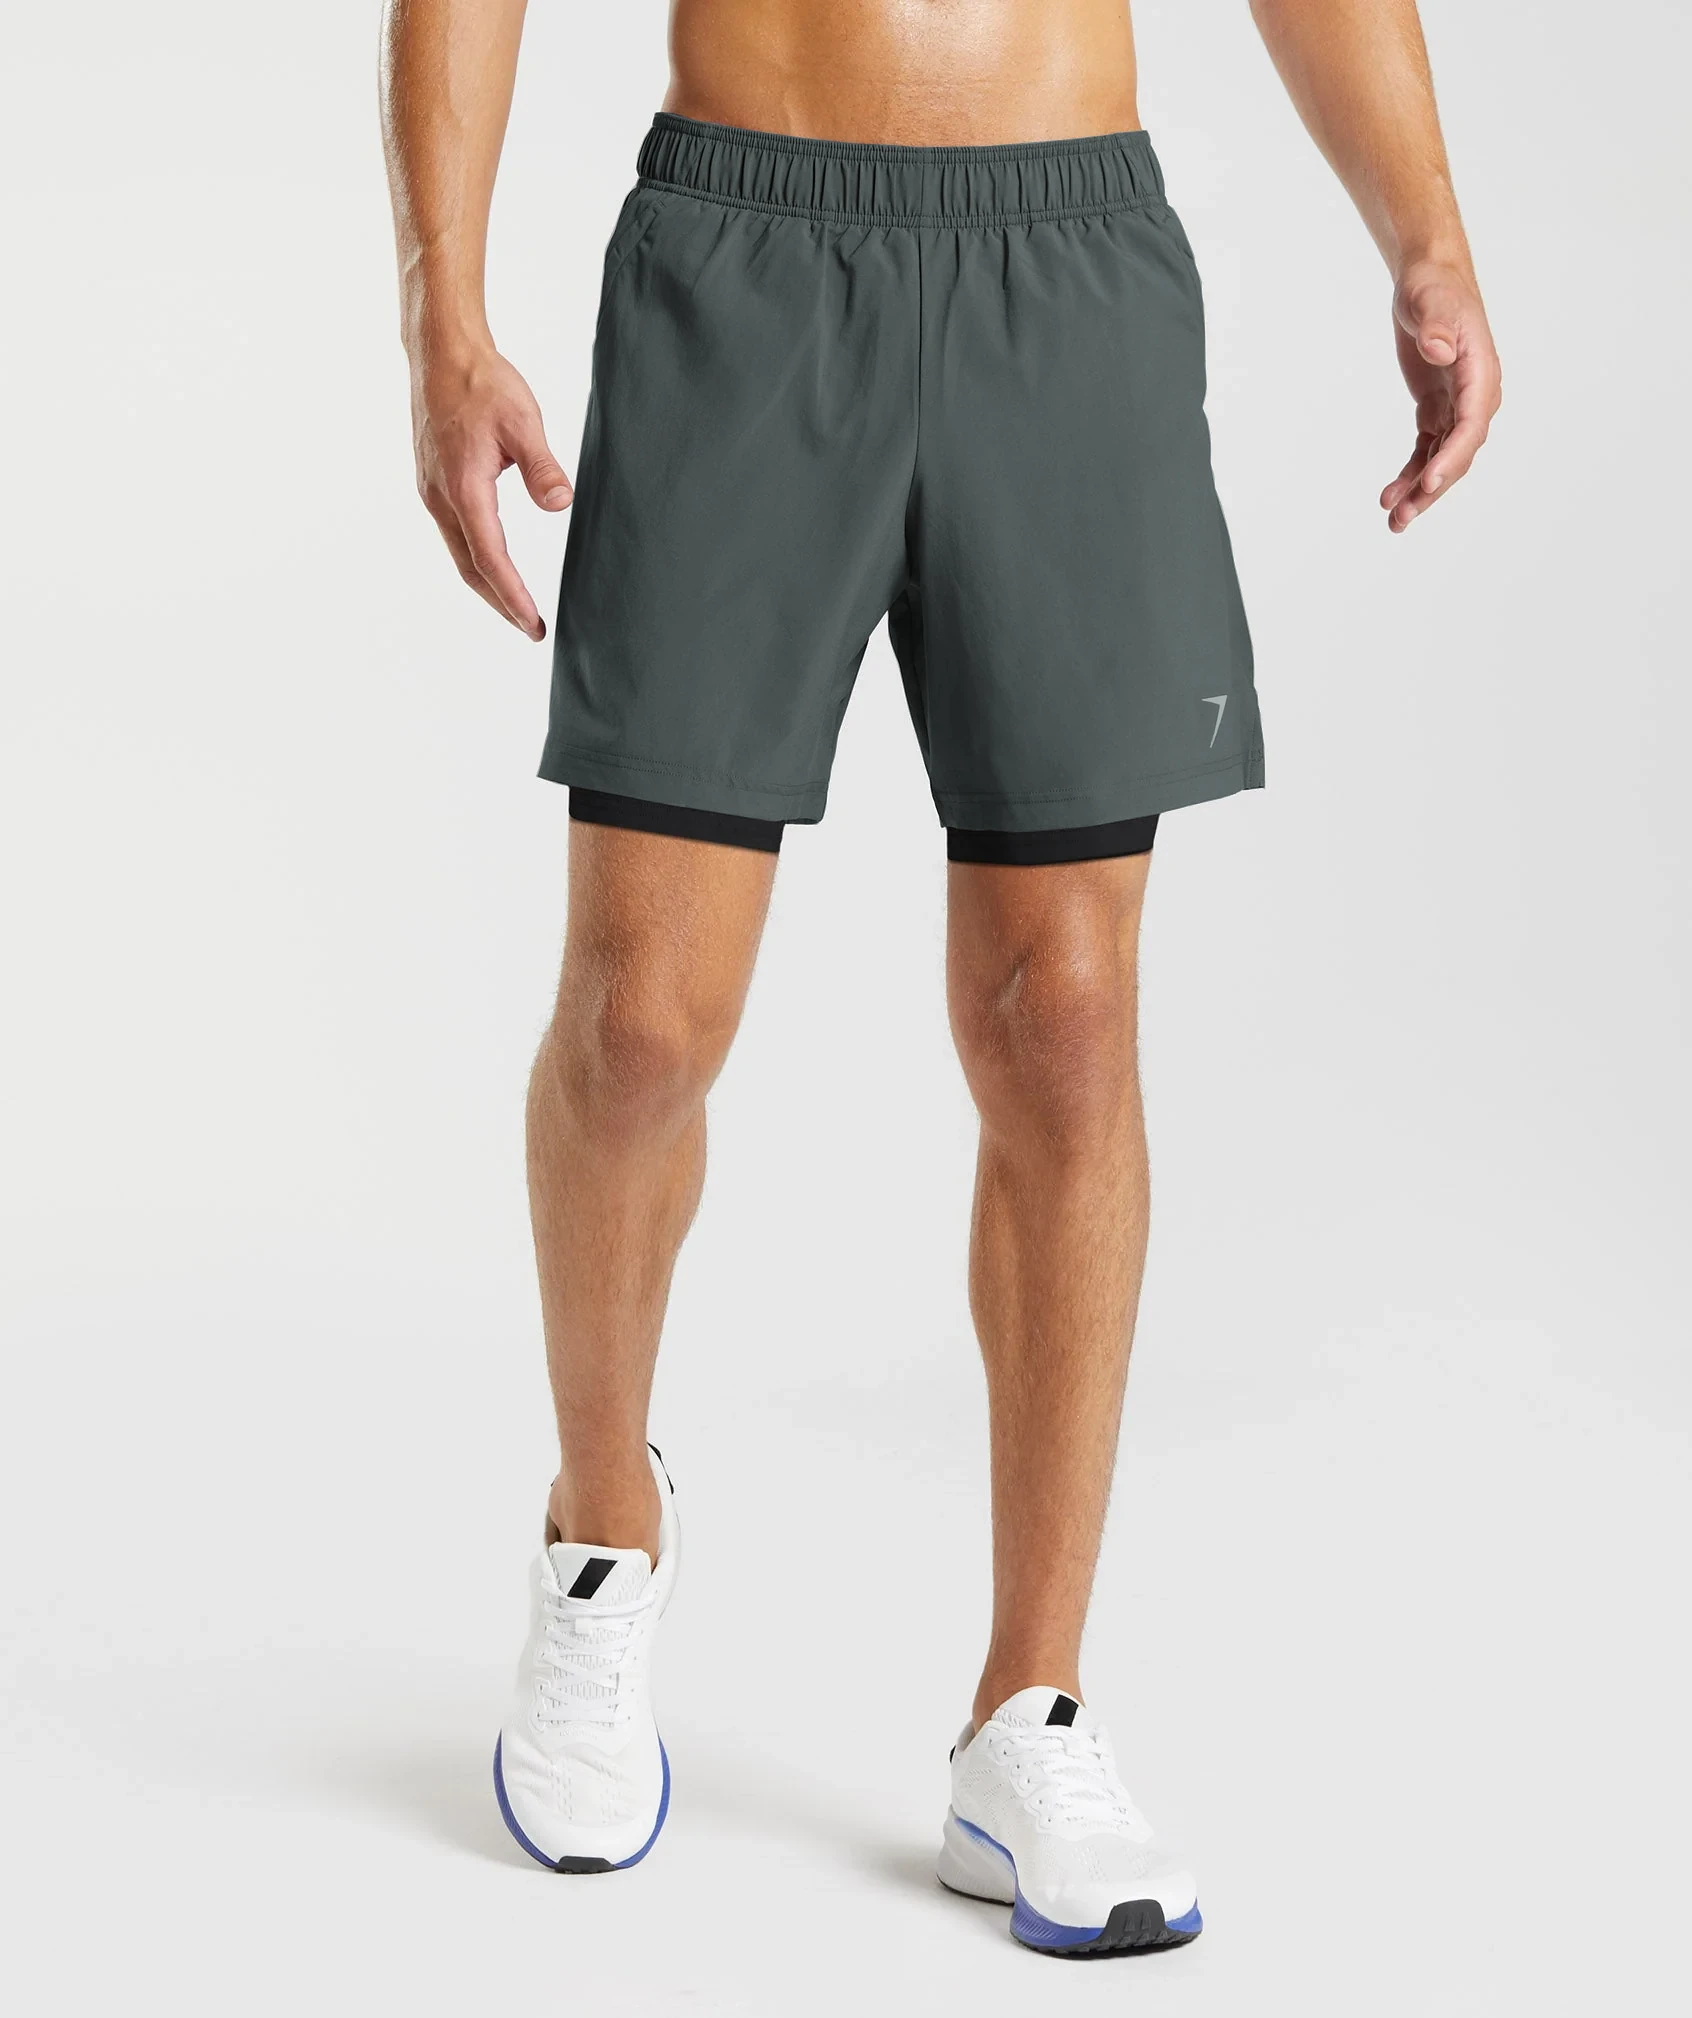 Shorts - Jogger Sports